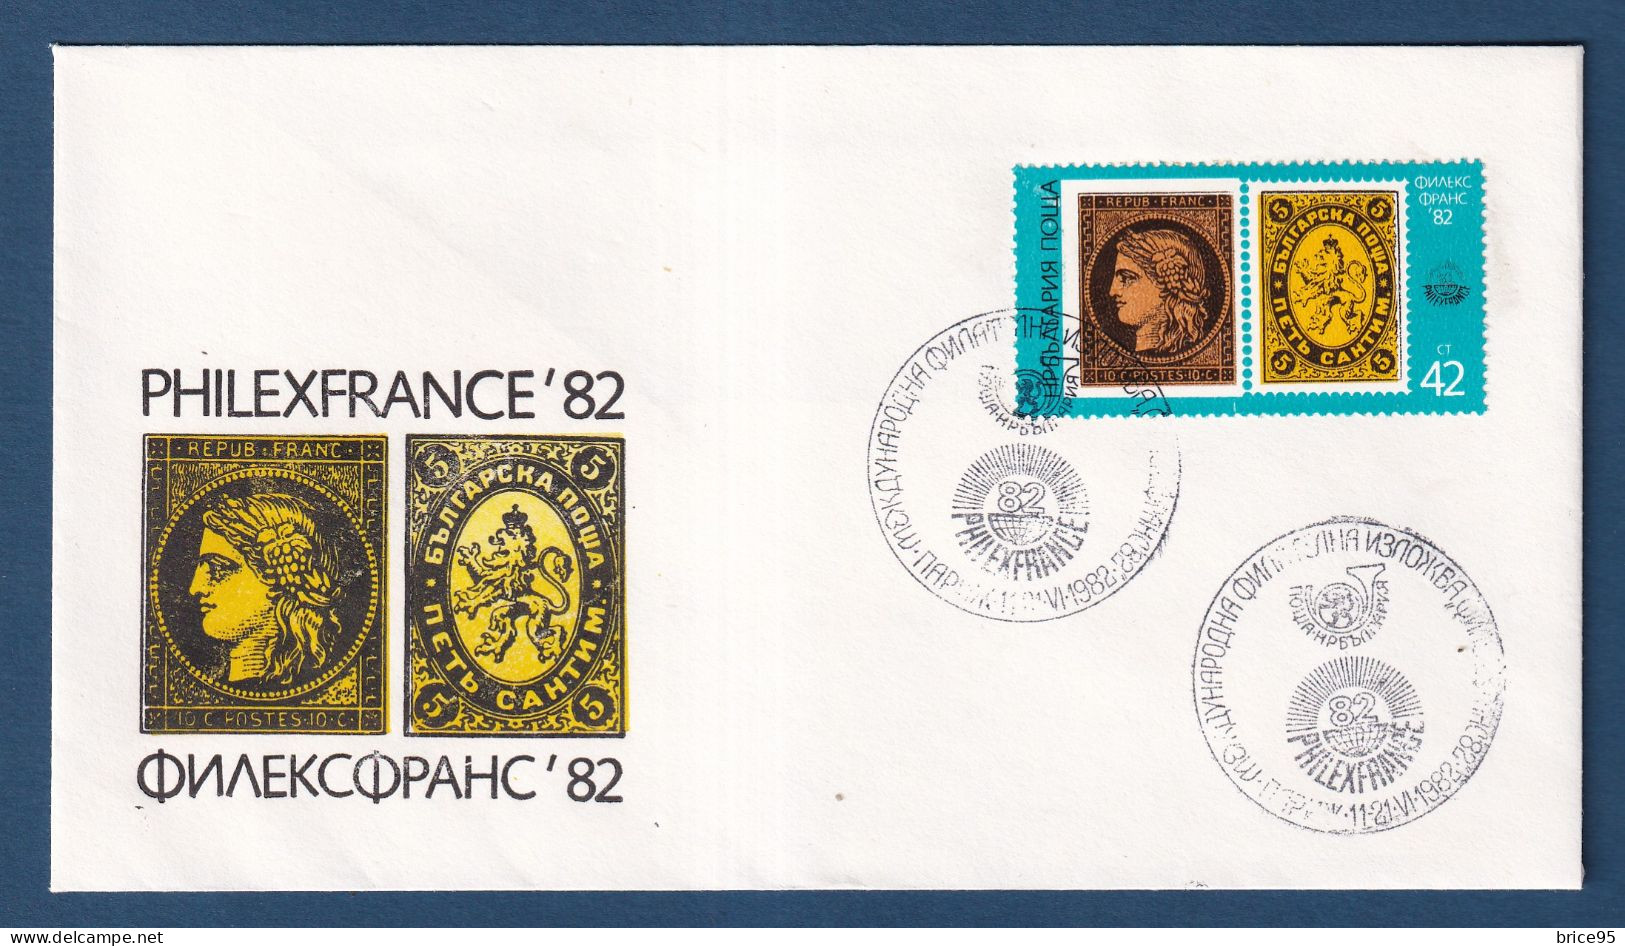 Ukraine - FDC - Premier Jour - Entier Postal - PhilexFrance 82 - 1982 - Ucraina